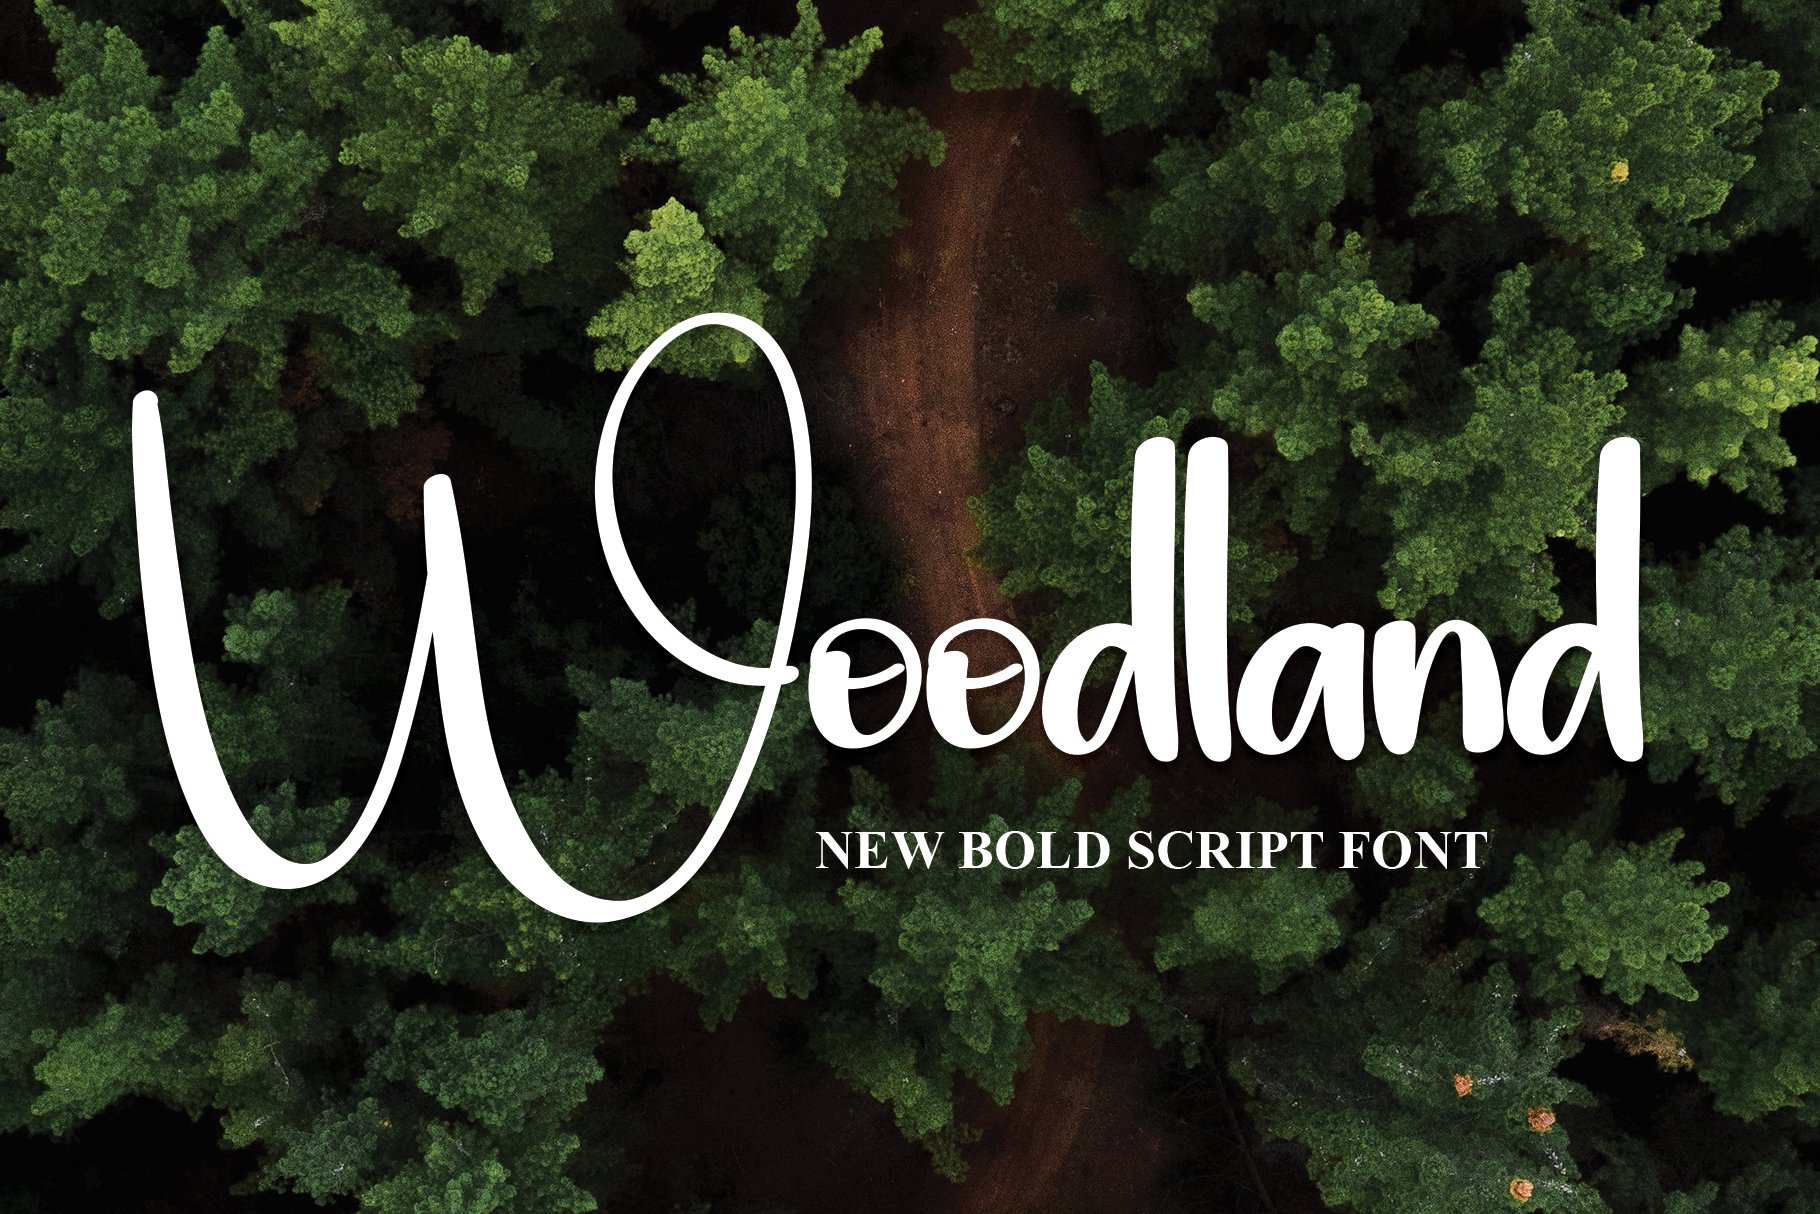 Woodland | Script Font cover image.